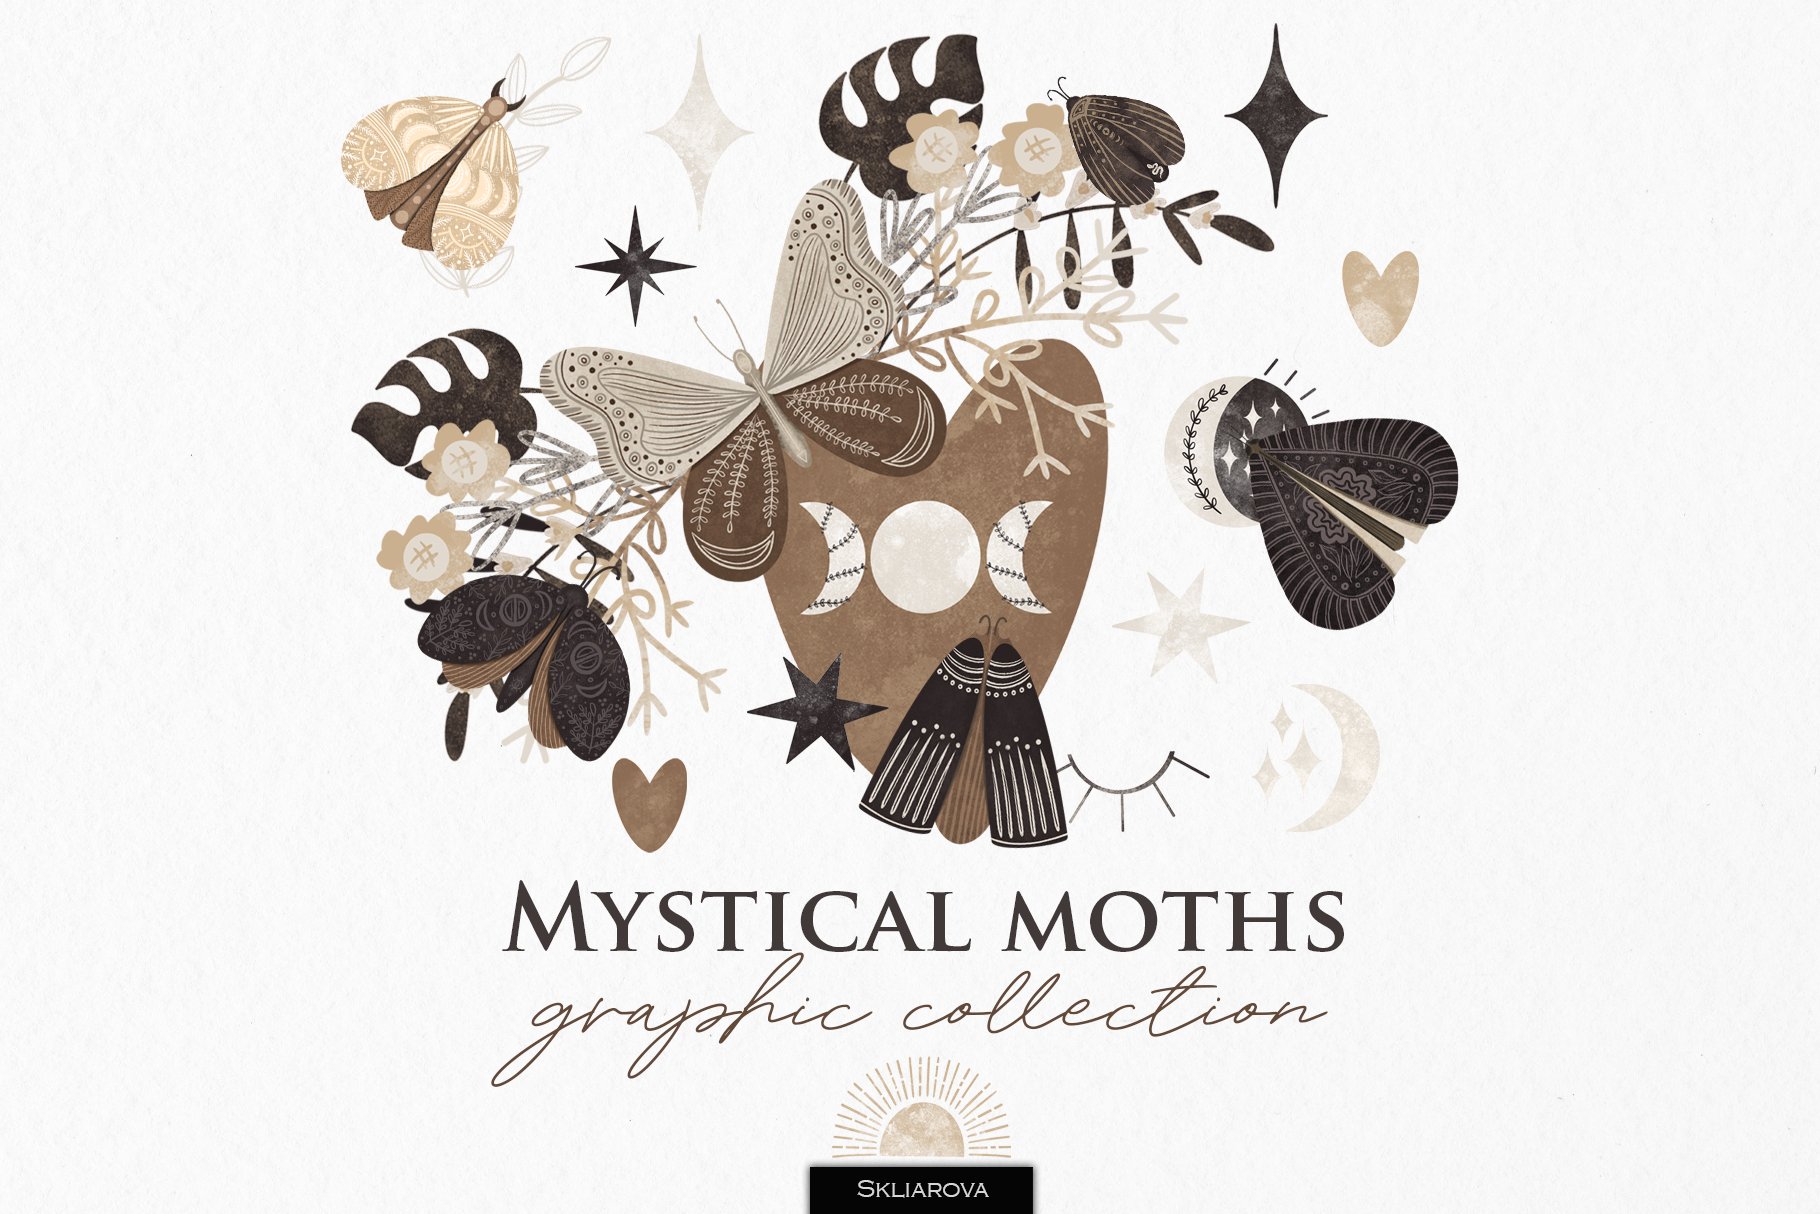 Mystical moths cover image.